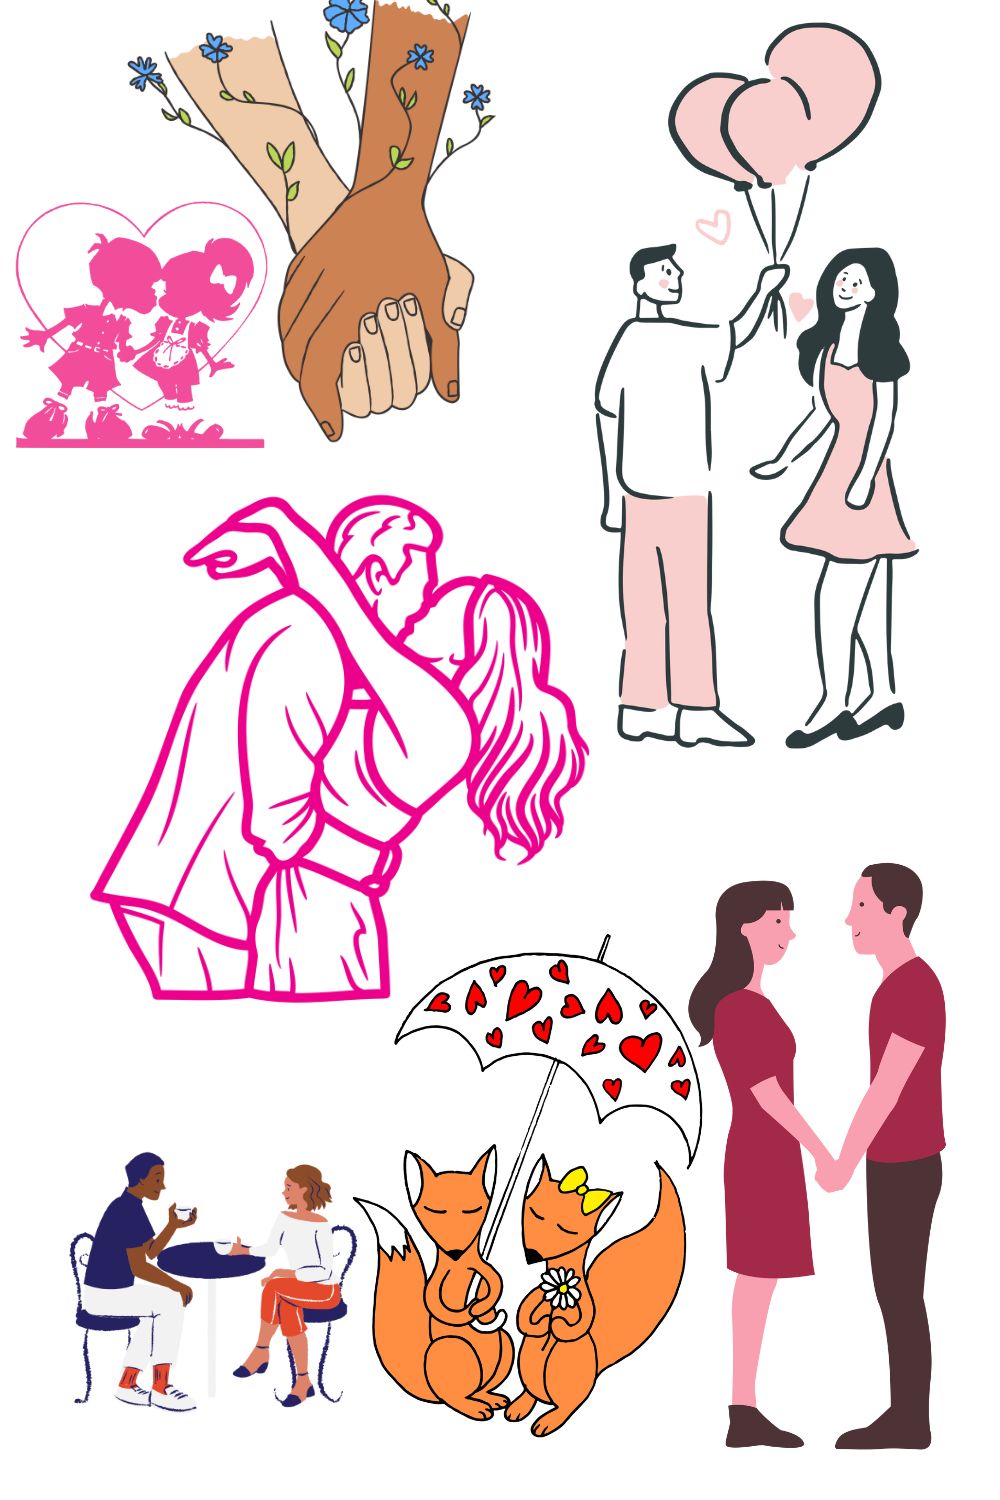 Couple Love Graphics - Bundle of 50 Pinterest image.